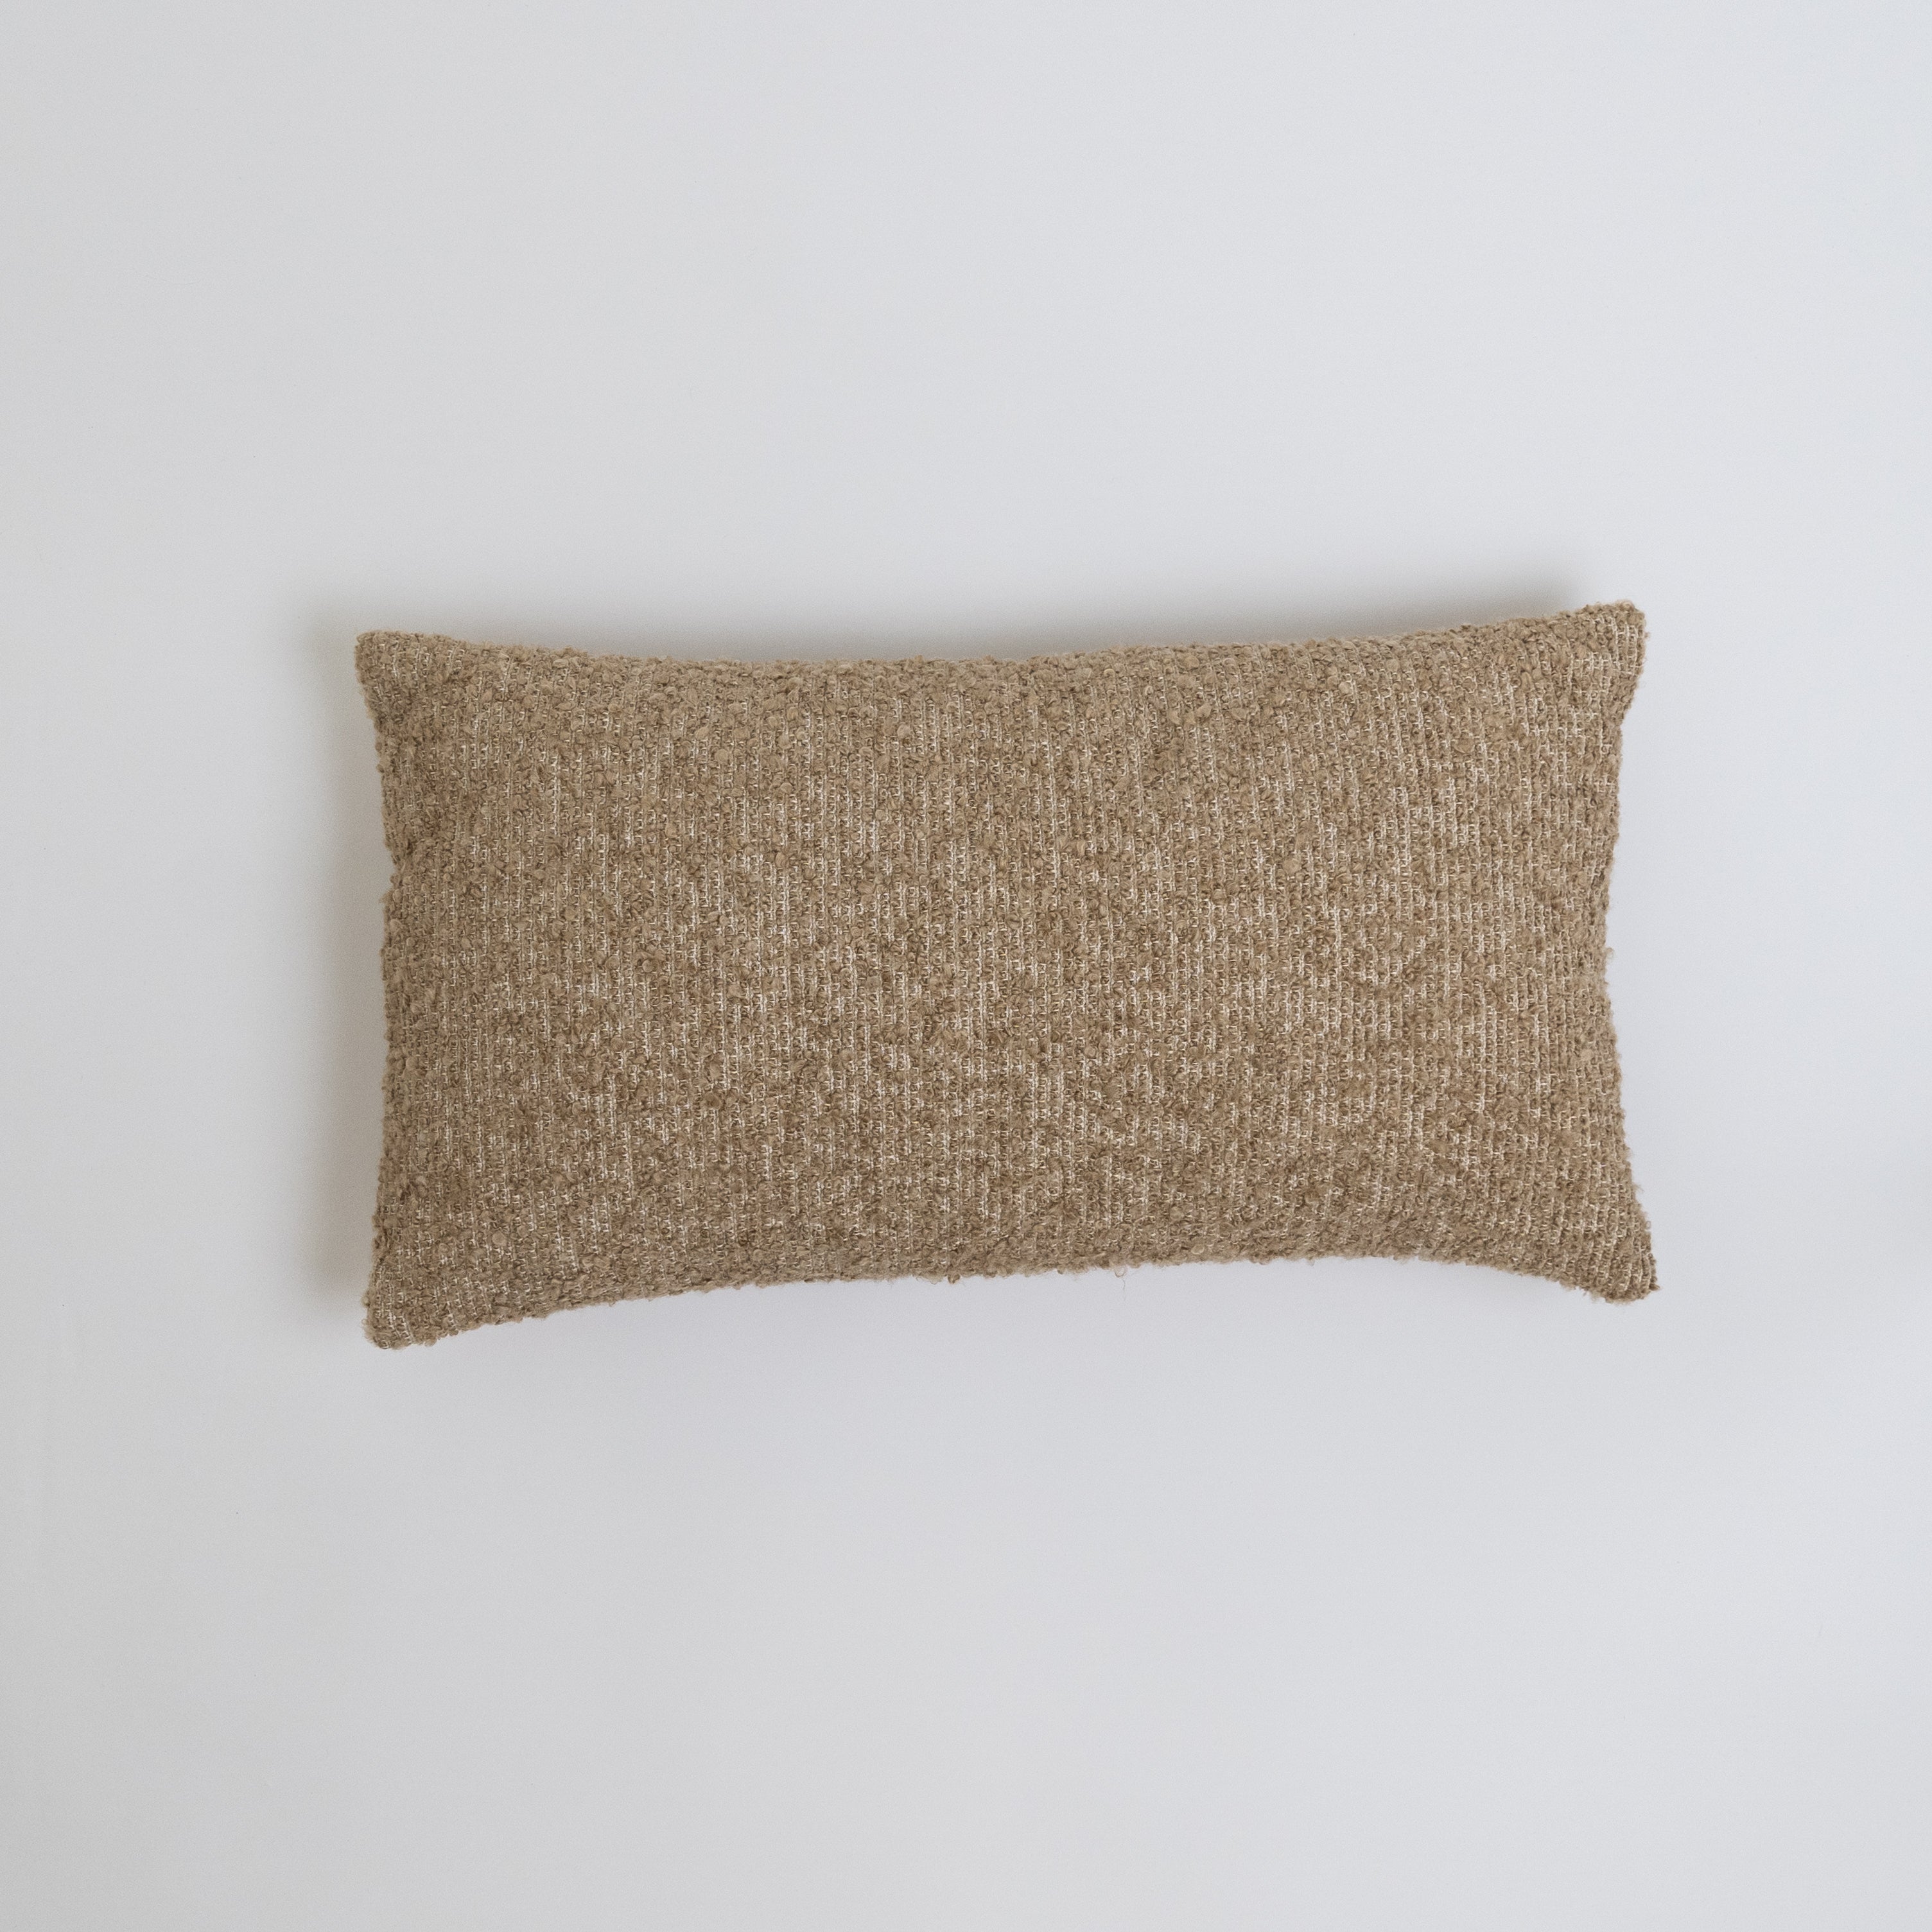 Cushion Cover 30x60cm  - WS Living - UAE - Cushions Wood and steel Furnitures - Dubai